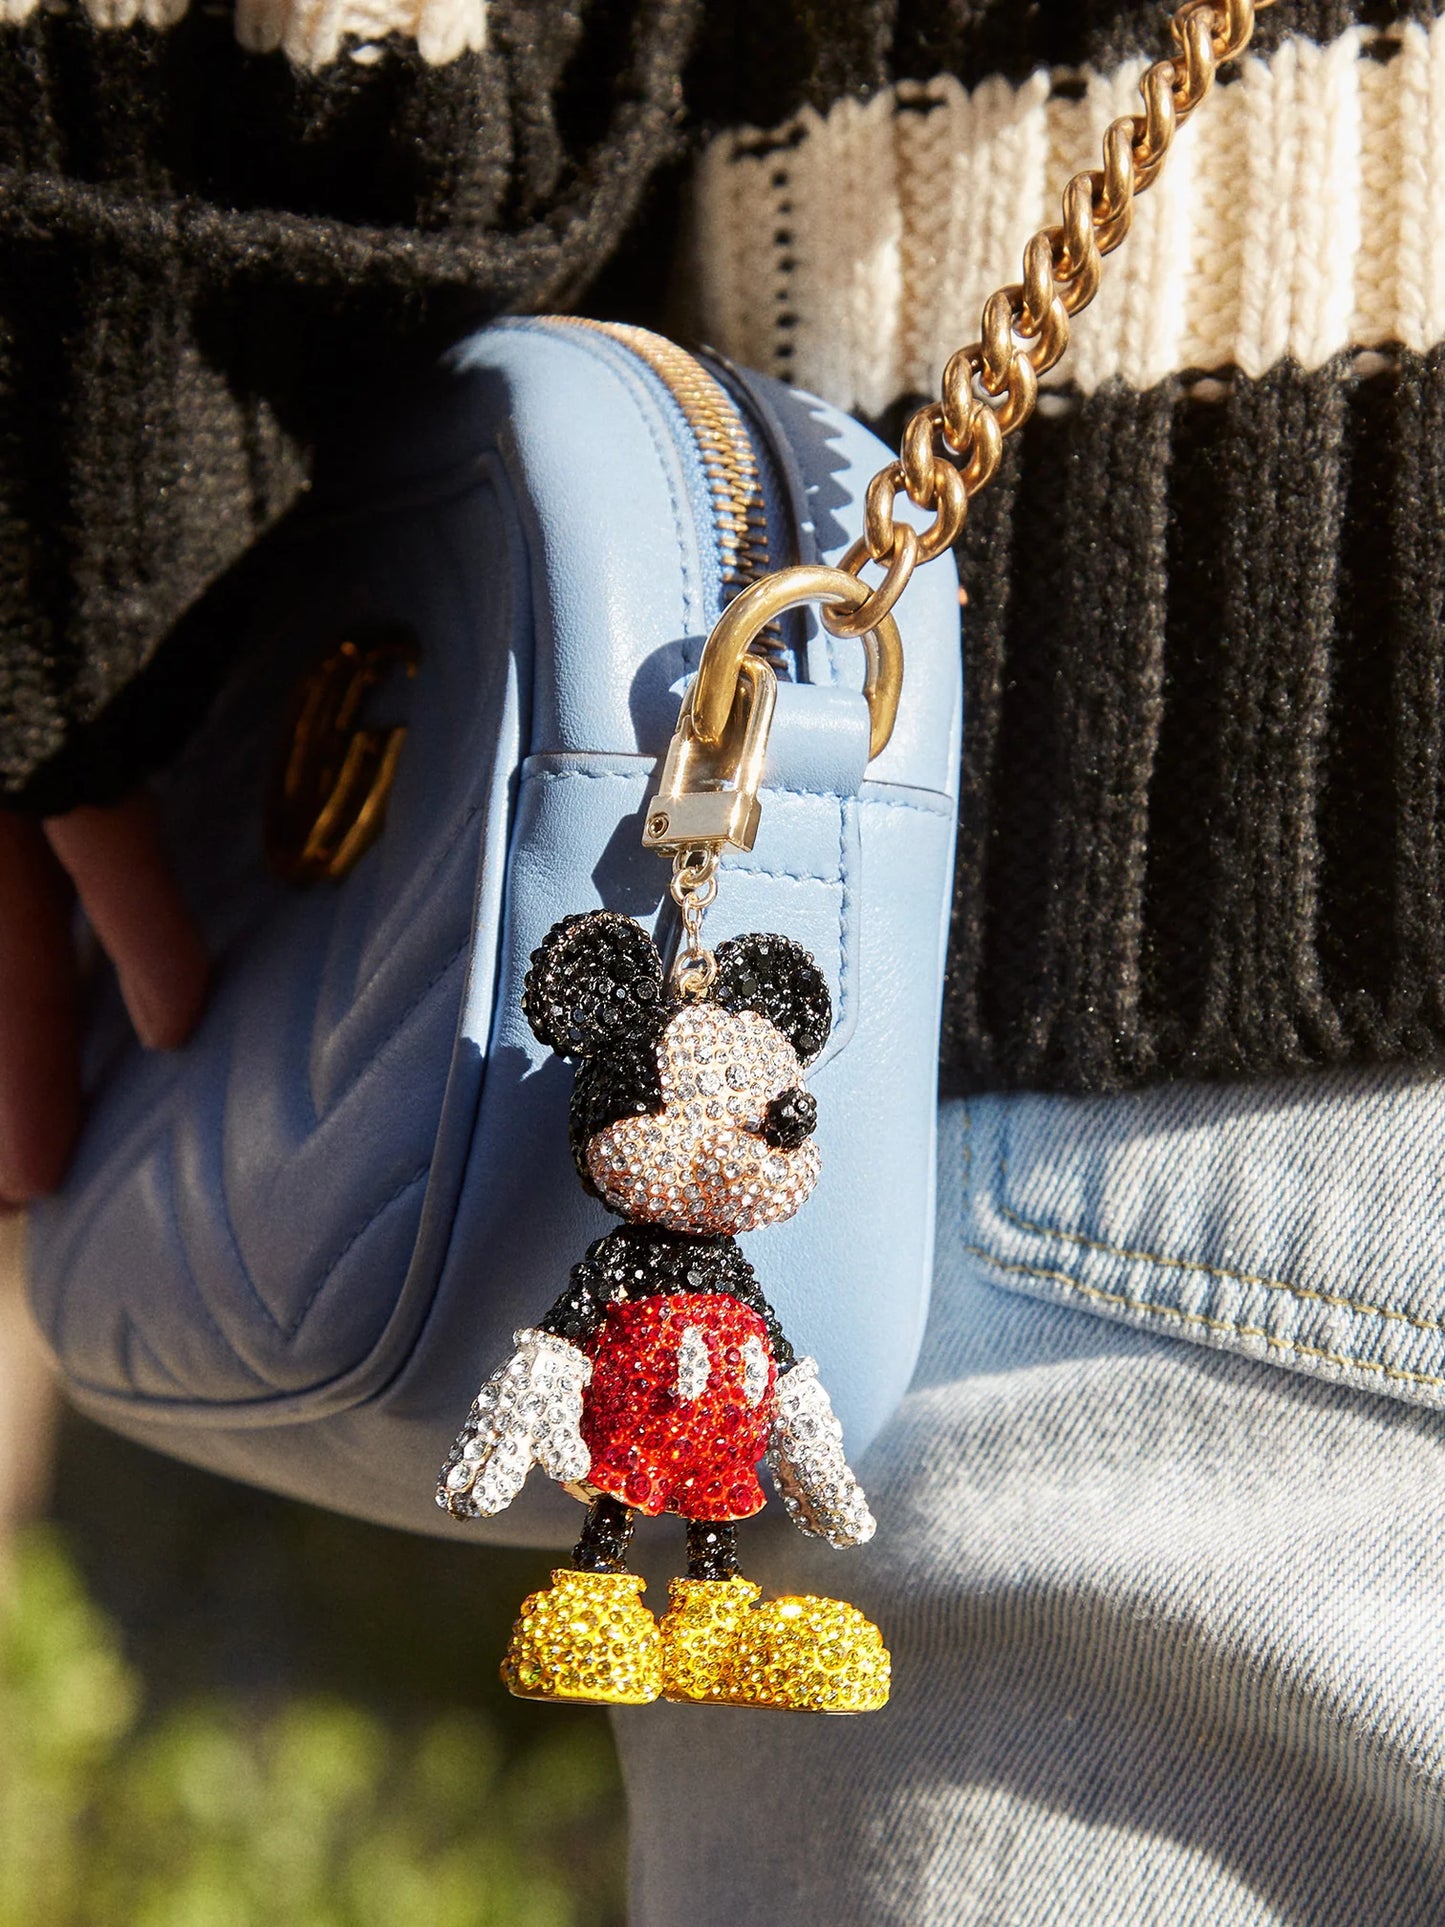 Mickey Mouse Disney Bag Charm